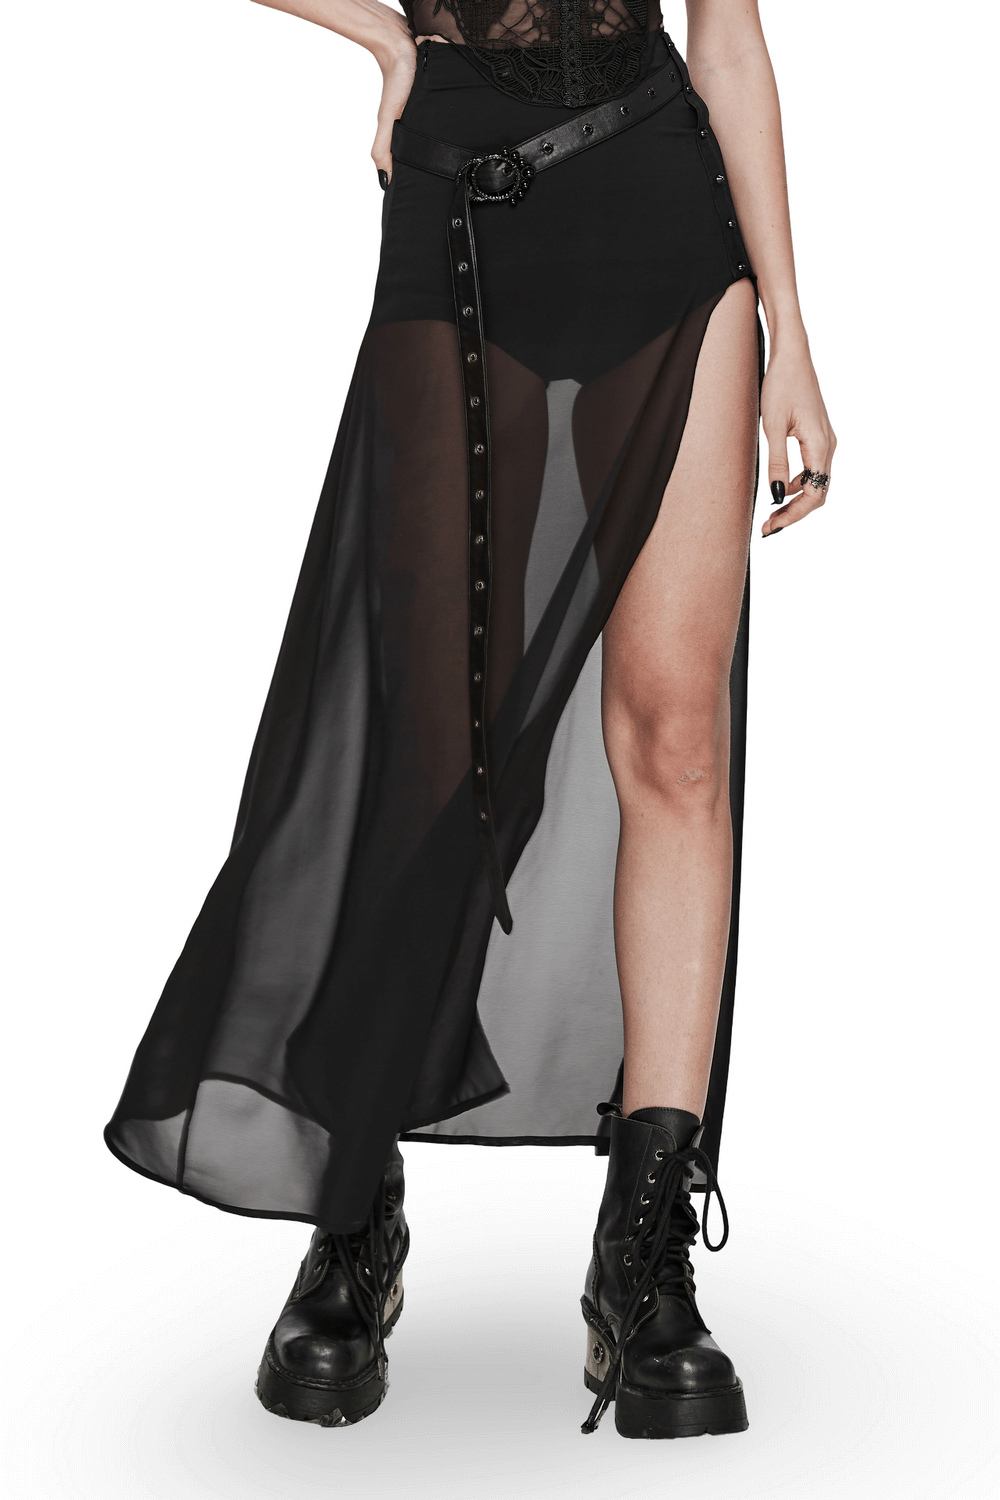 Elegant Black Sheer Chiffon Maxi Skirt with Belt